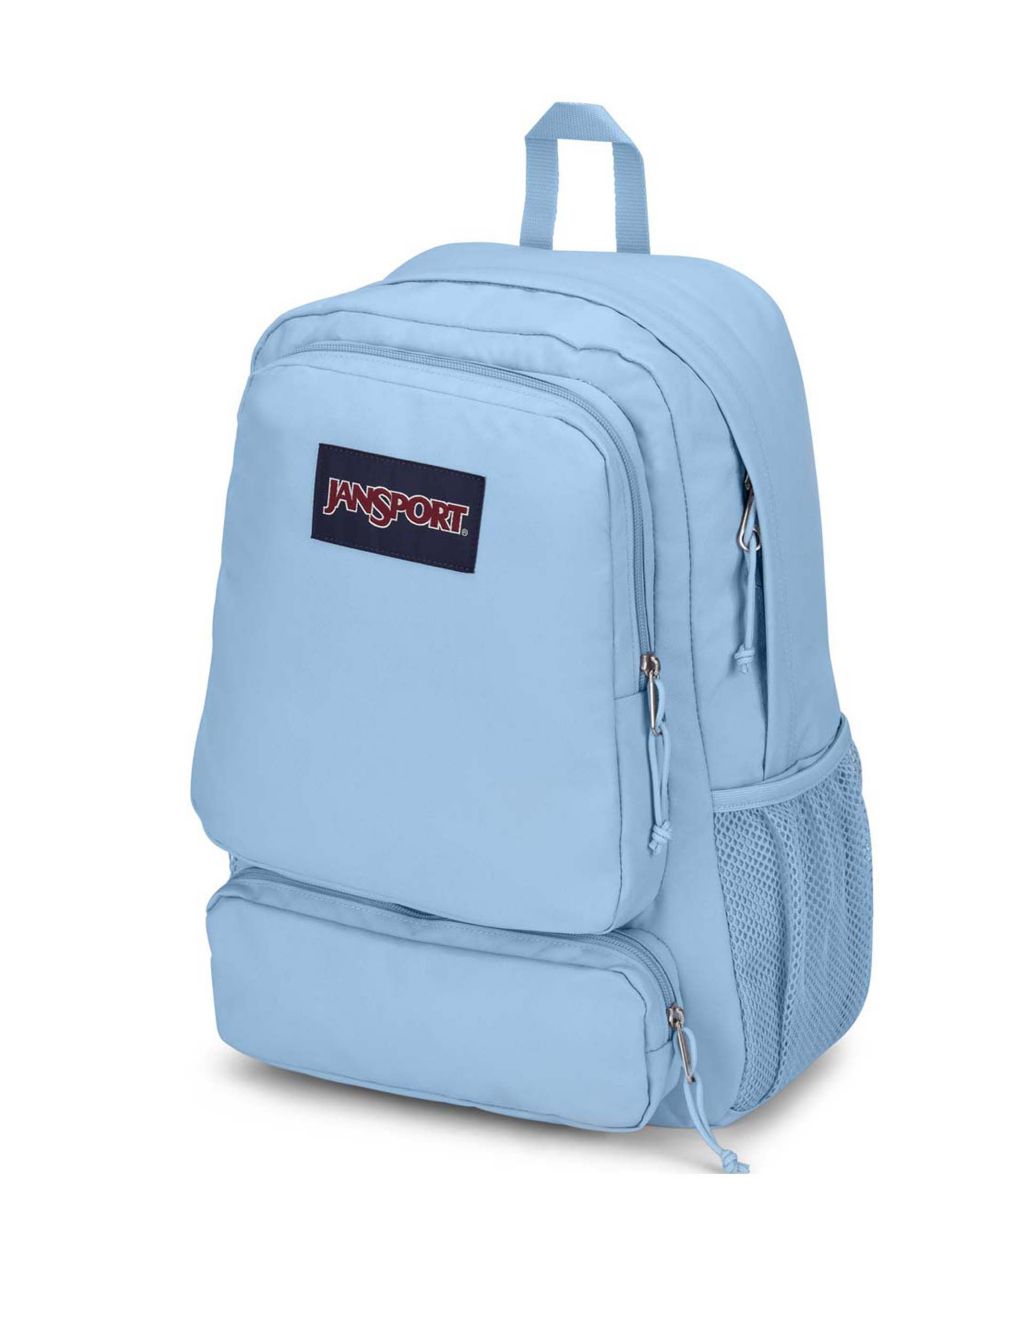 Doubleton Multi Pocket Backpack image 2